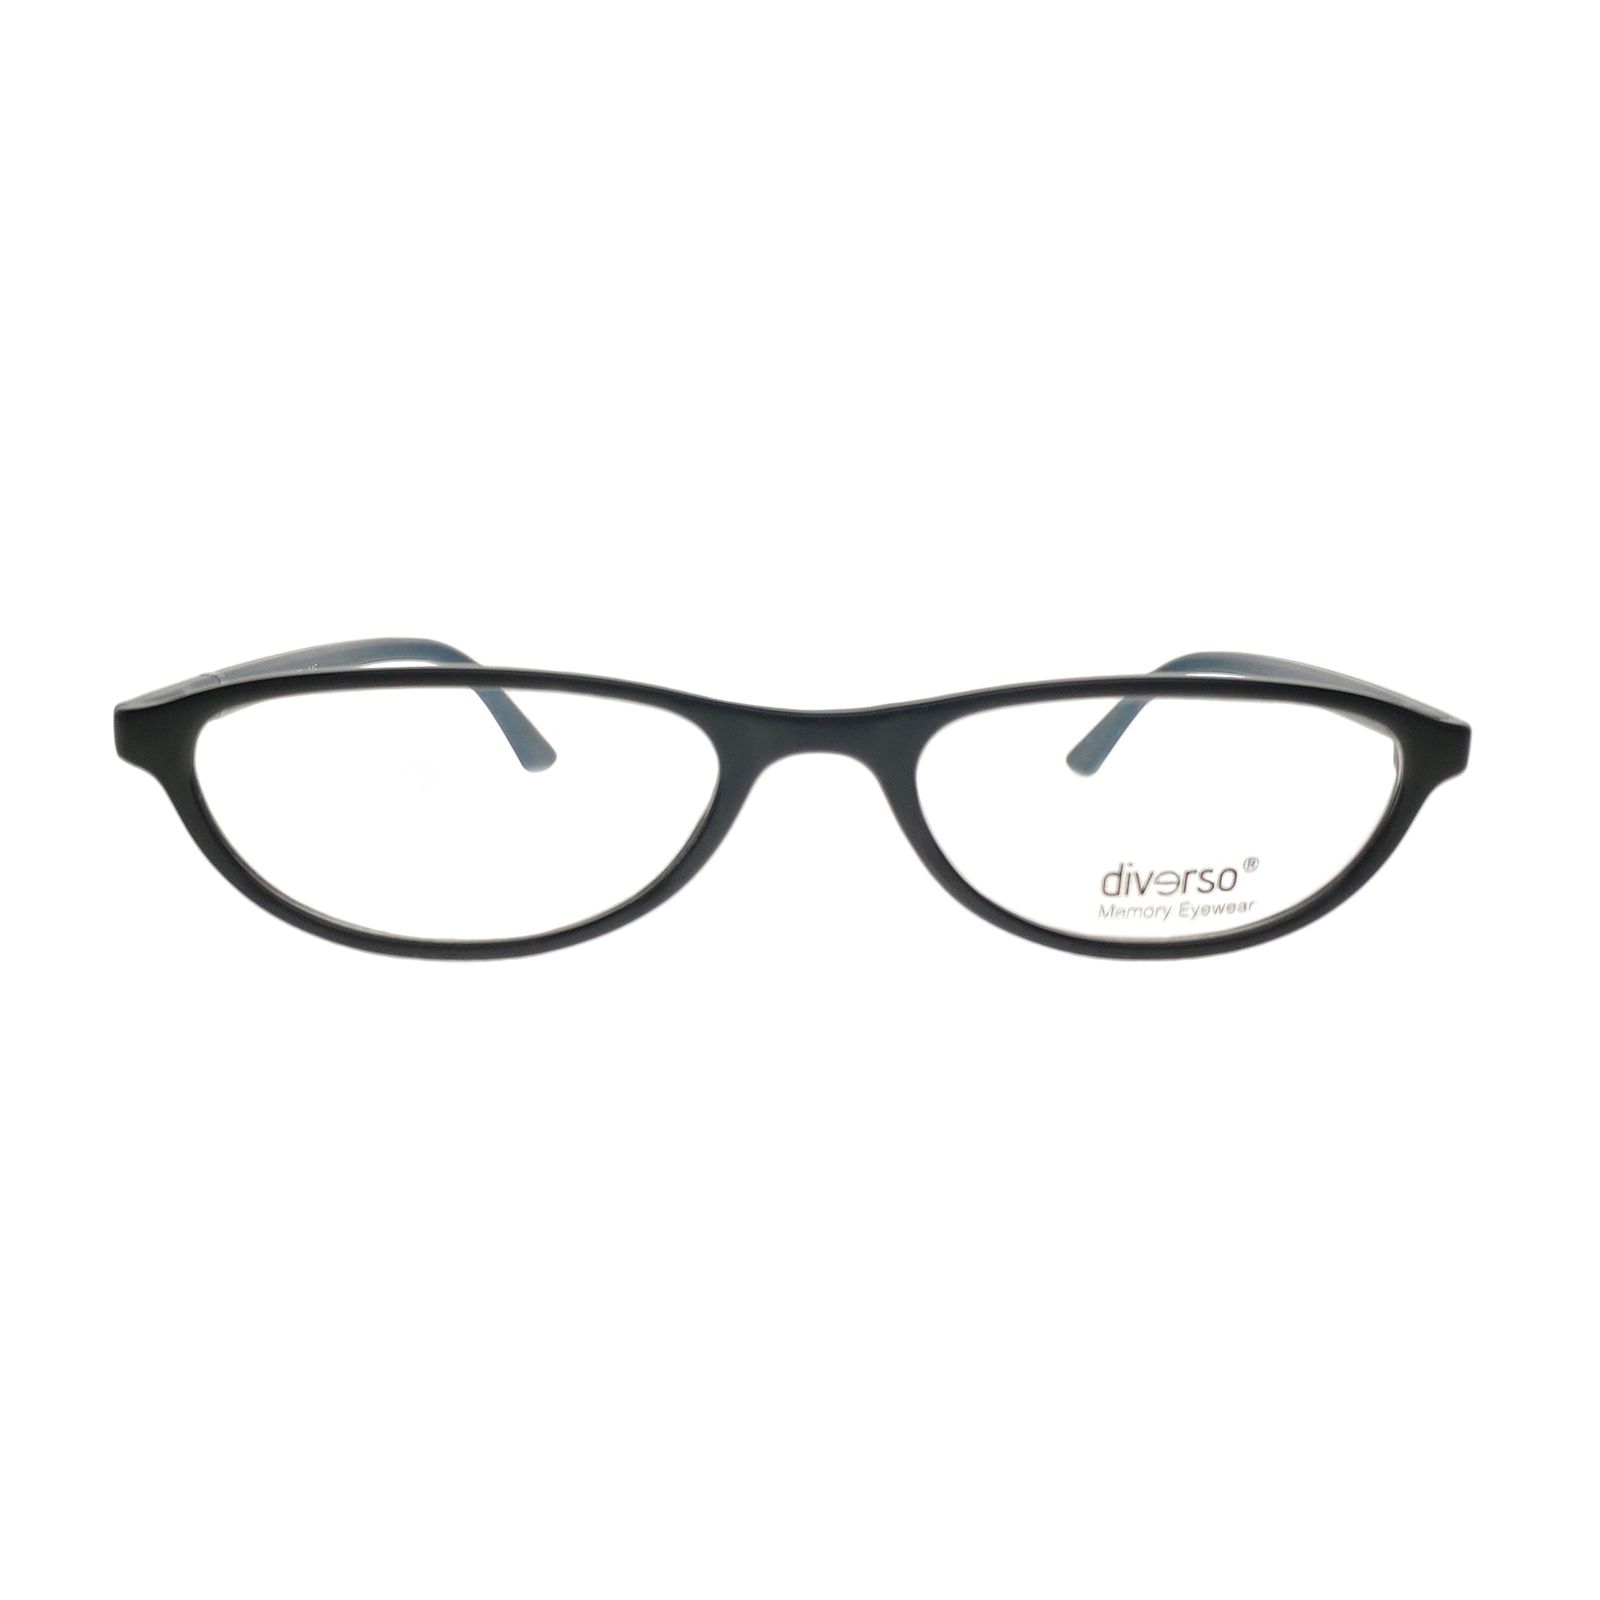 فریم عینک طبی دیورسو مدل 1647 - DV1206C0639 - 50.20.145 -  - 2